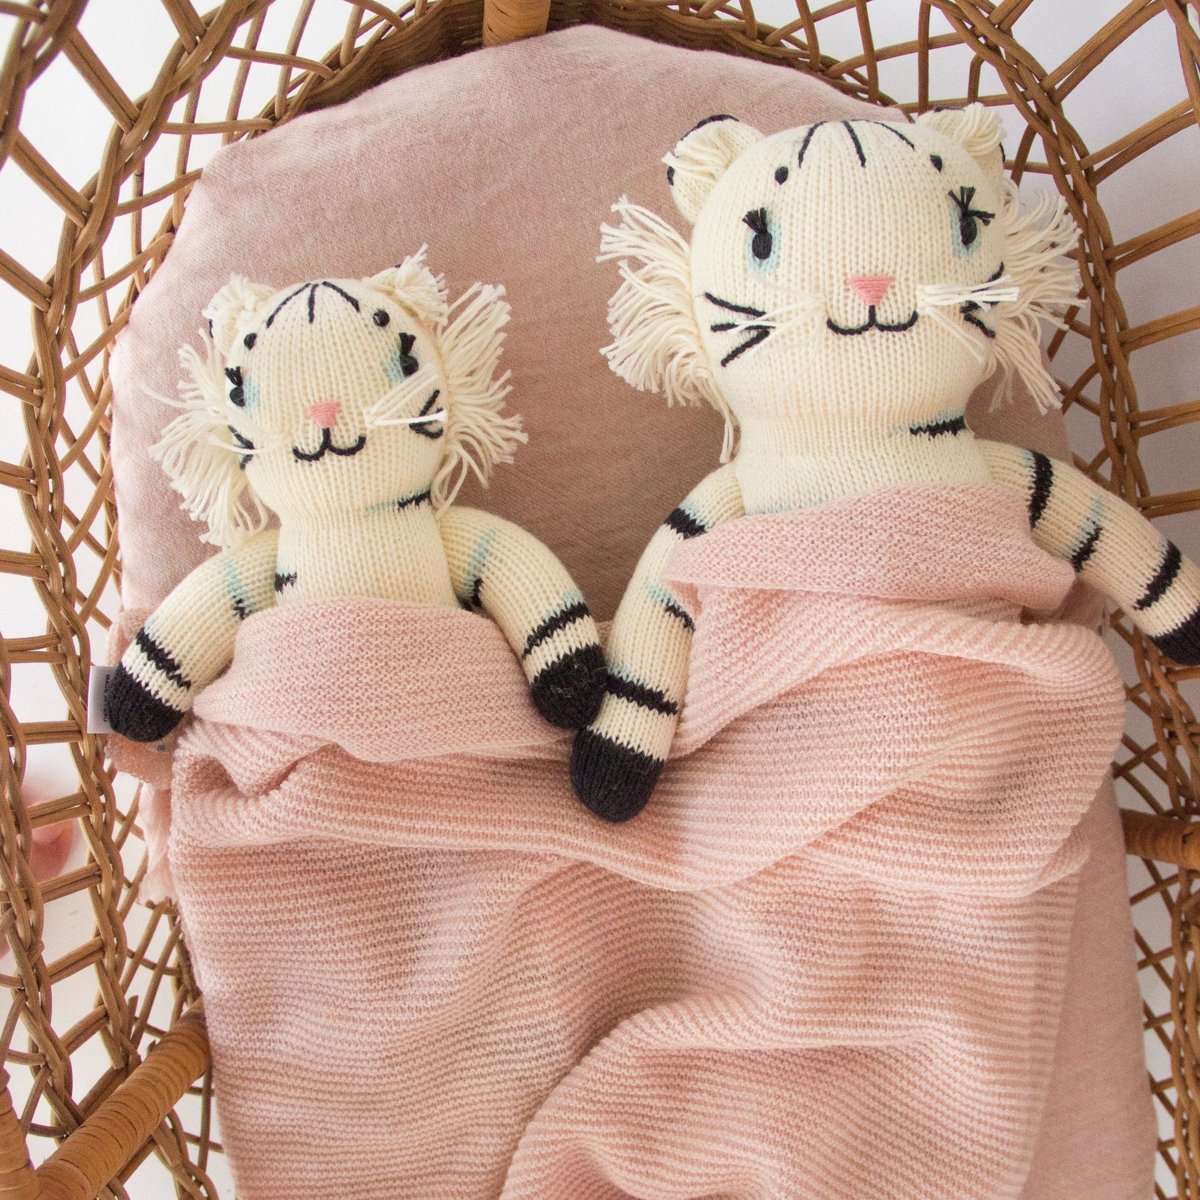 Blabla | "Zigzag the Tiger" kids cotton doll - mondocherry - cot